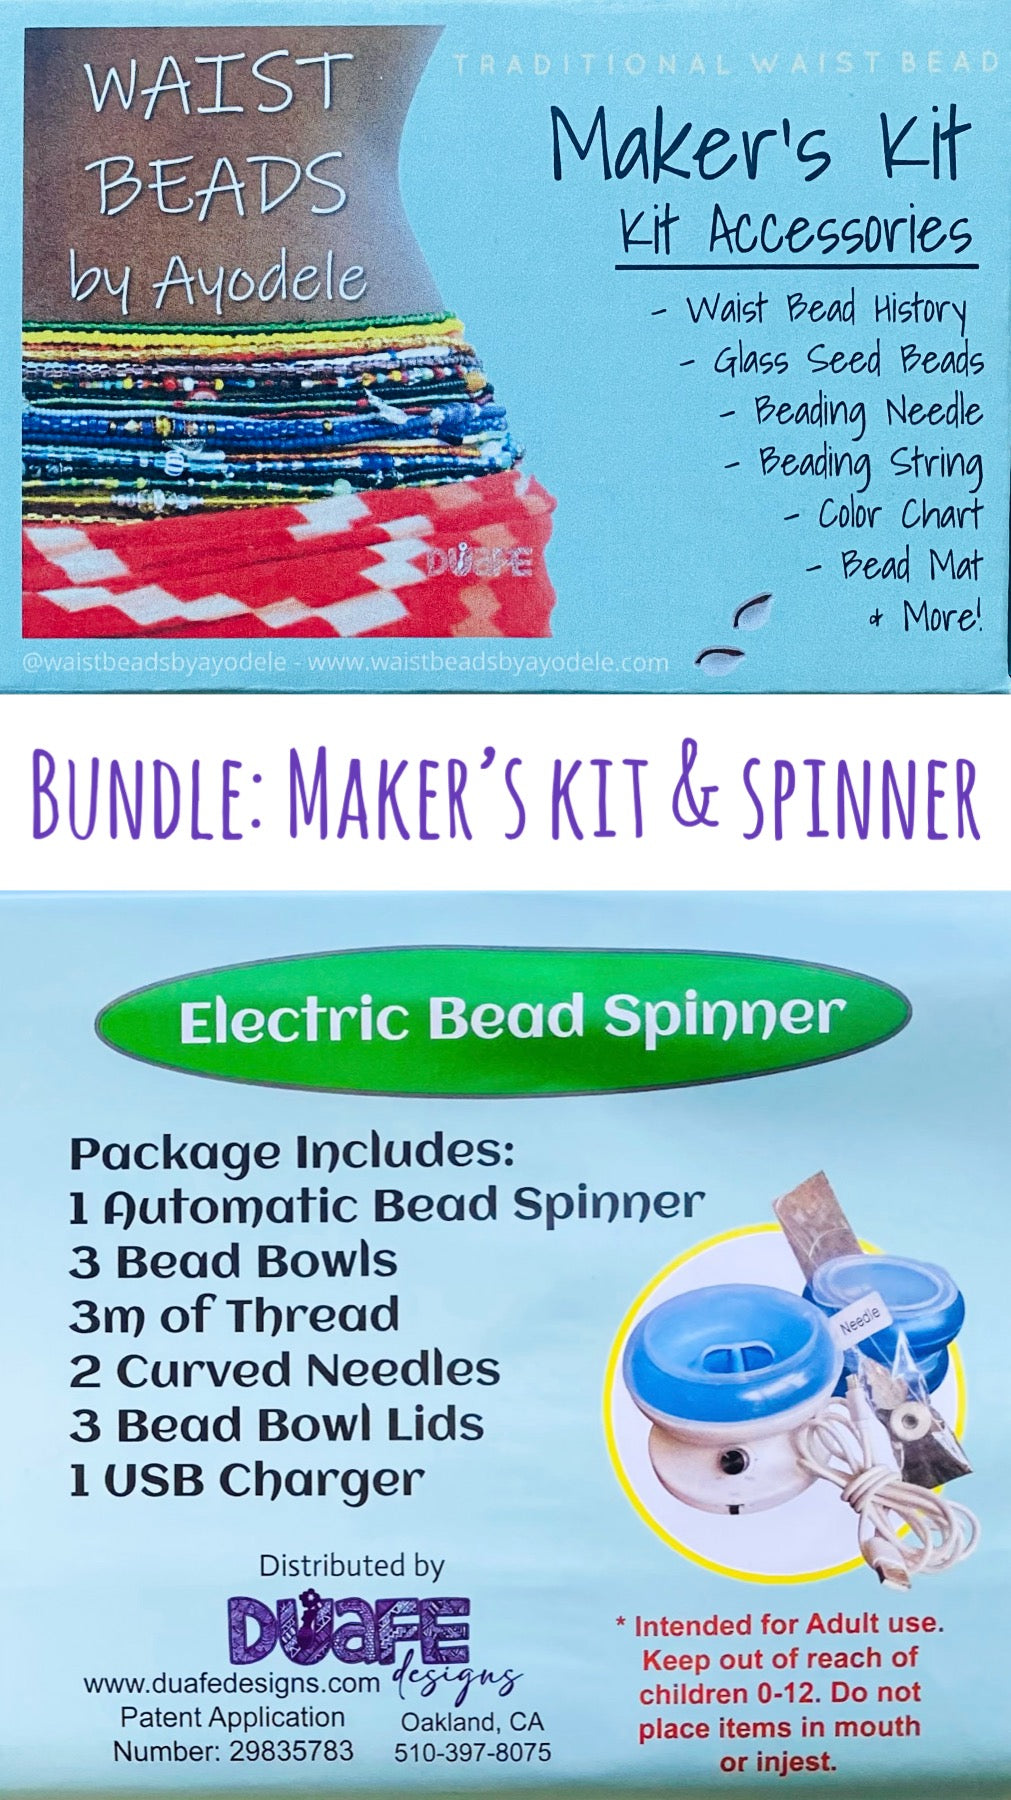 Bundle Deal!!! Traditional Waist Bead Maker Kit & Electric Bead